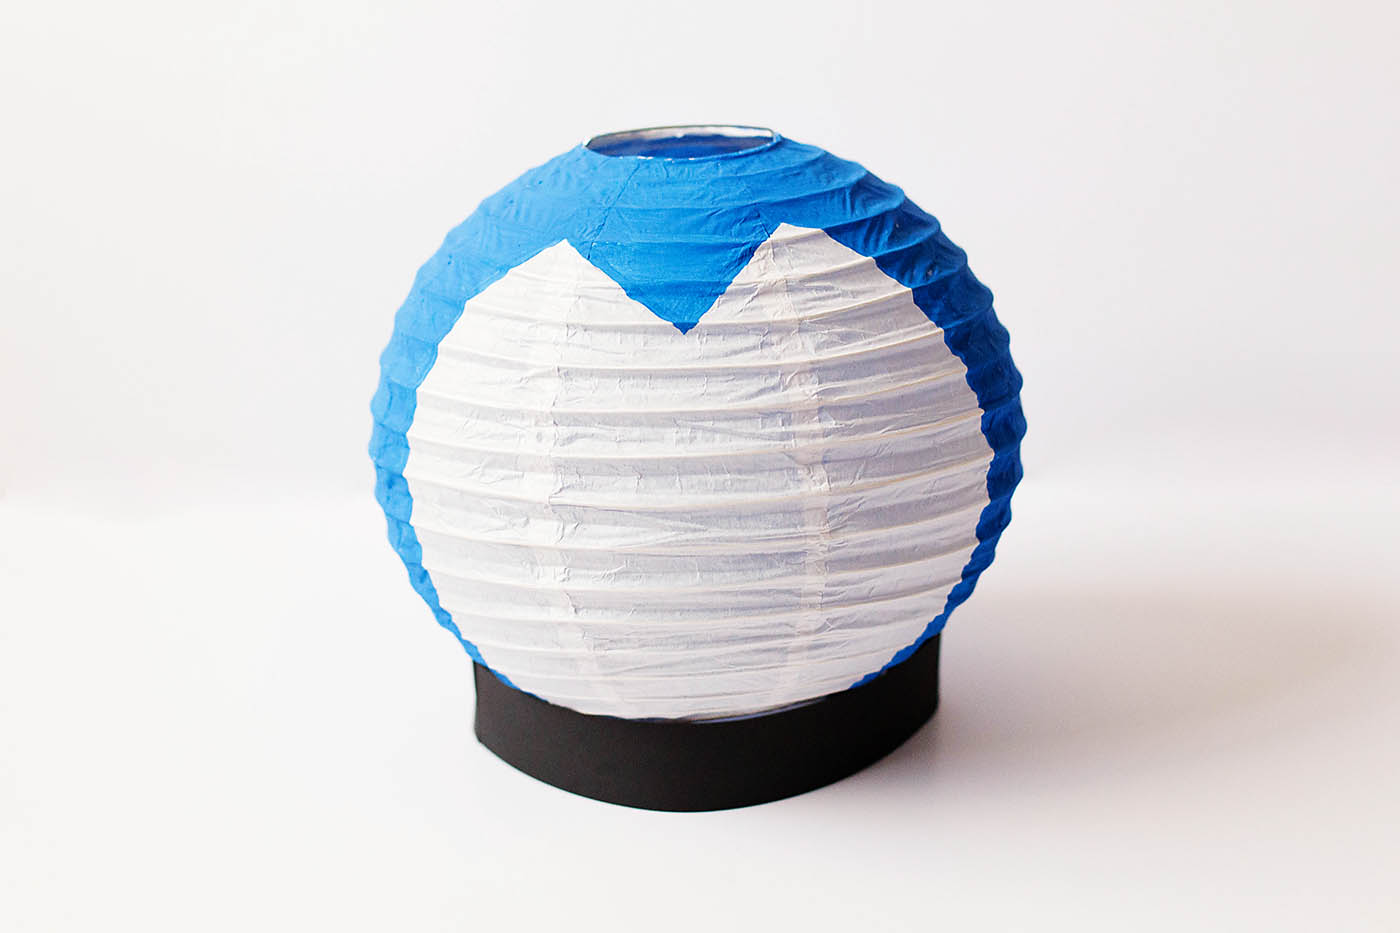 DIY Pokémon Inspired Snorlax Lantern - a fun craft idea for Pokémon and Pokémon Go fans!